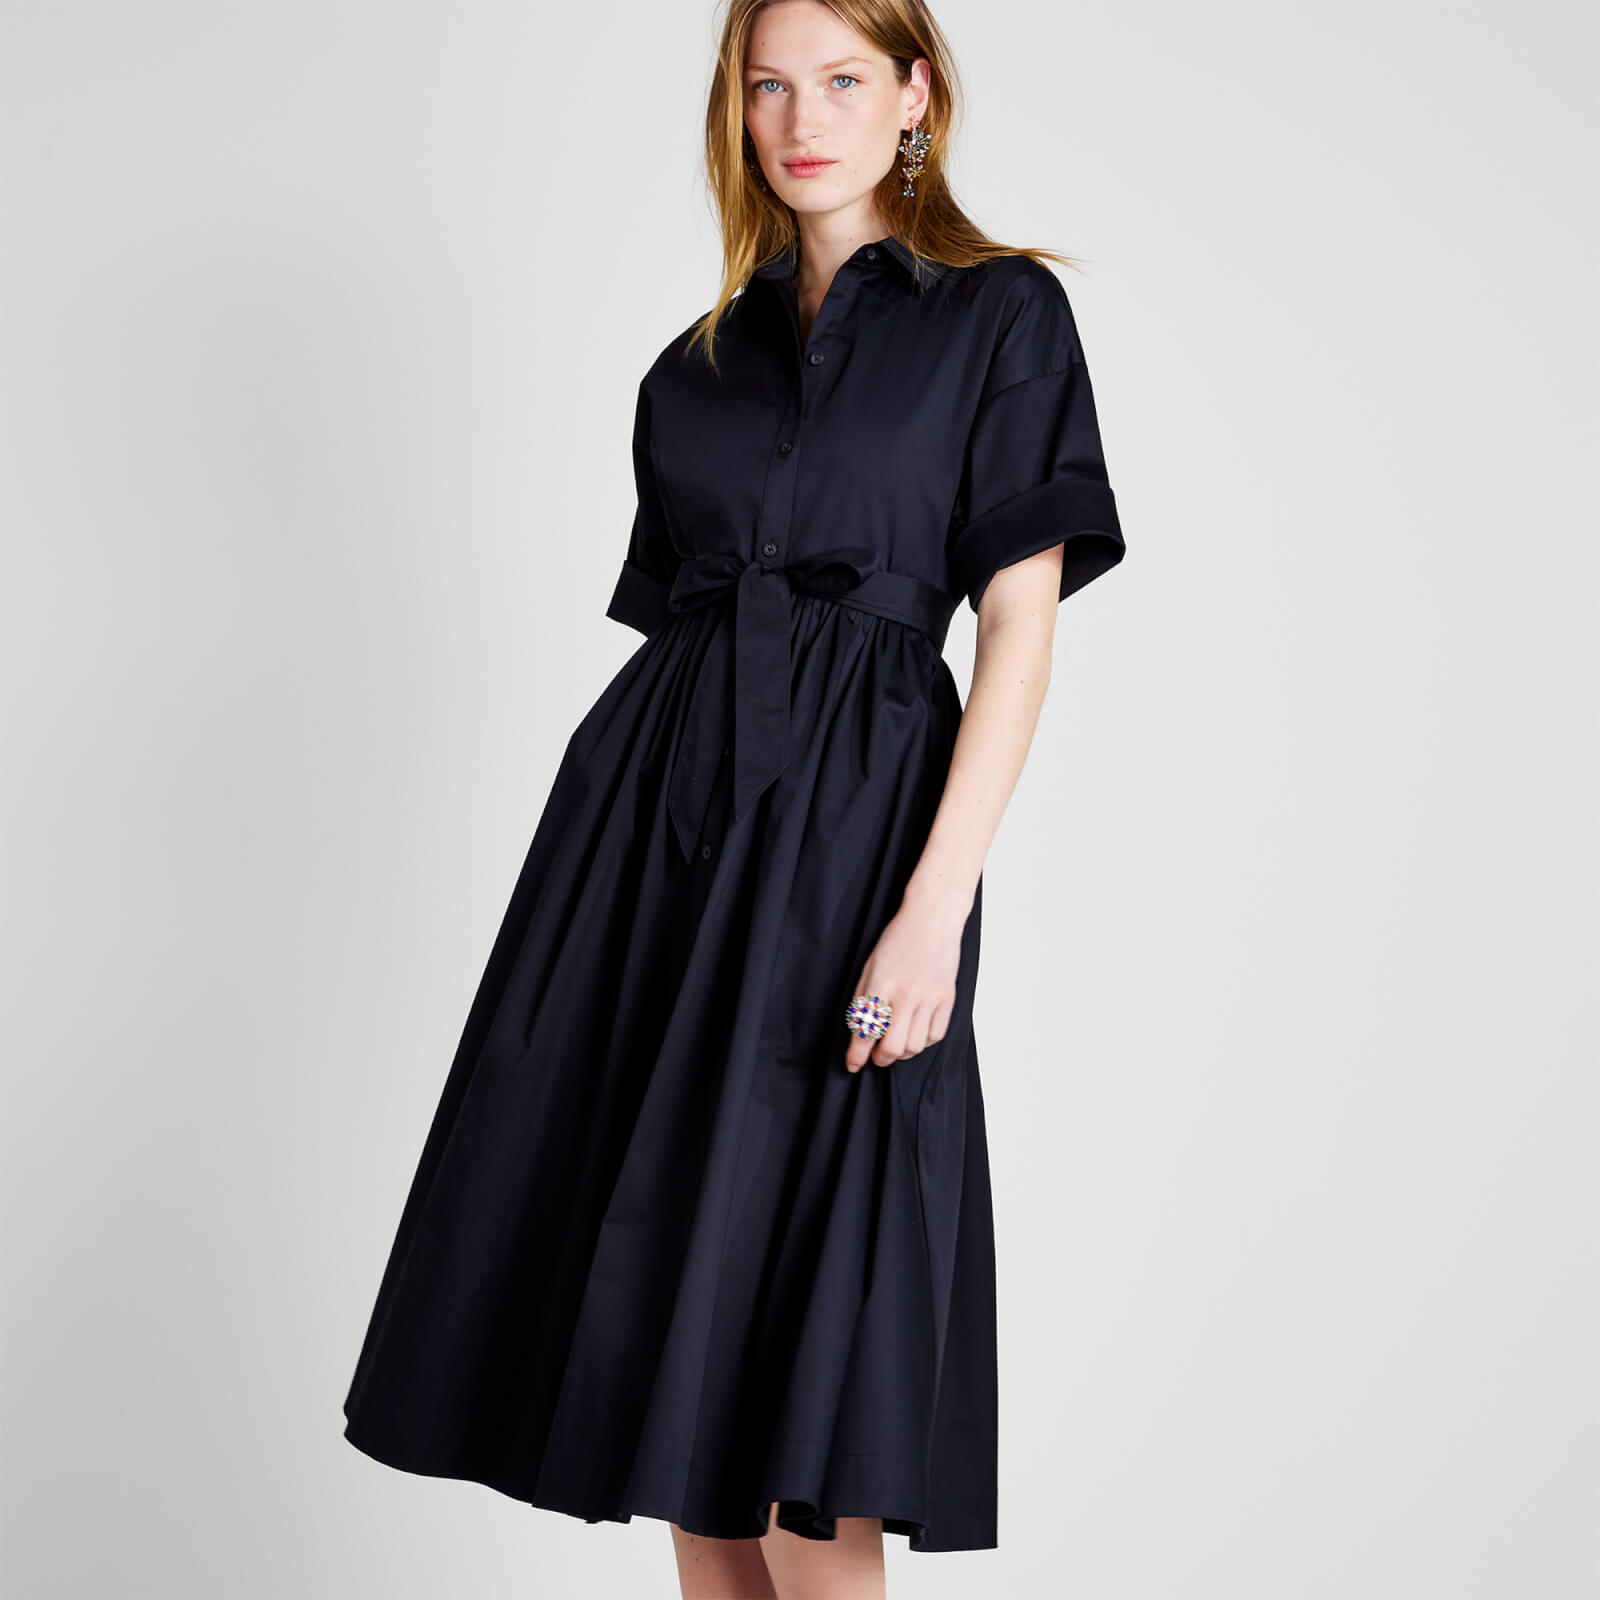 kate spade new york women's poplin montauk dress - black - m